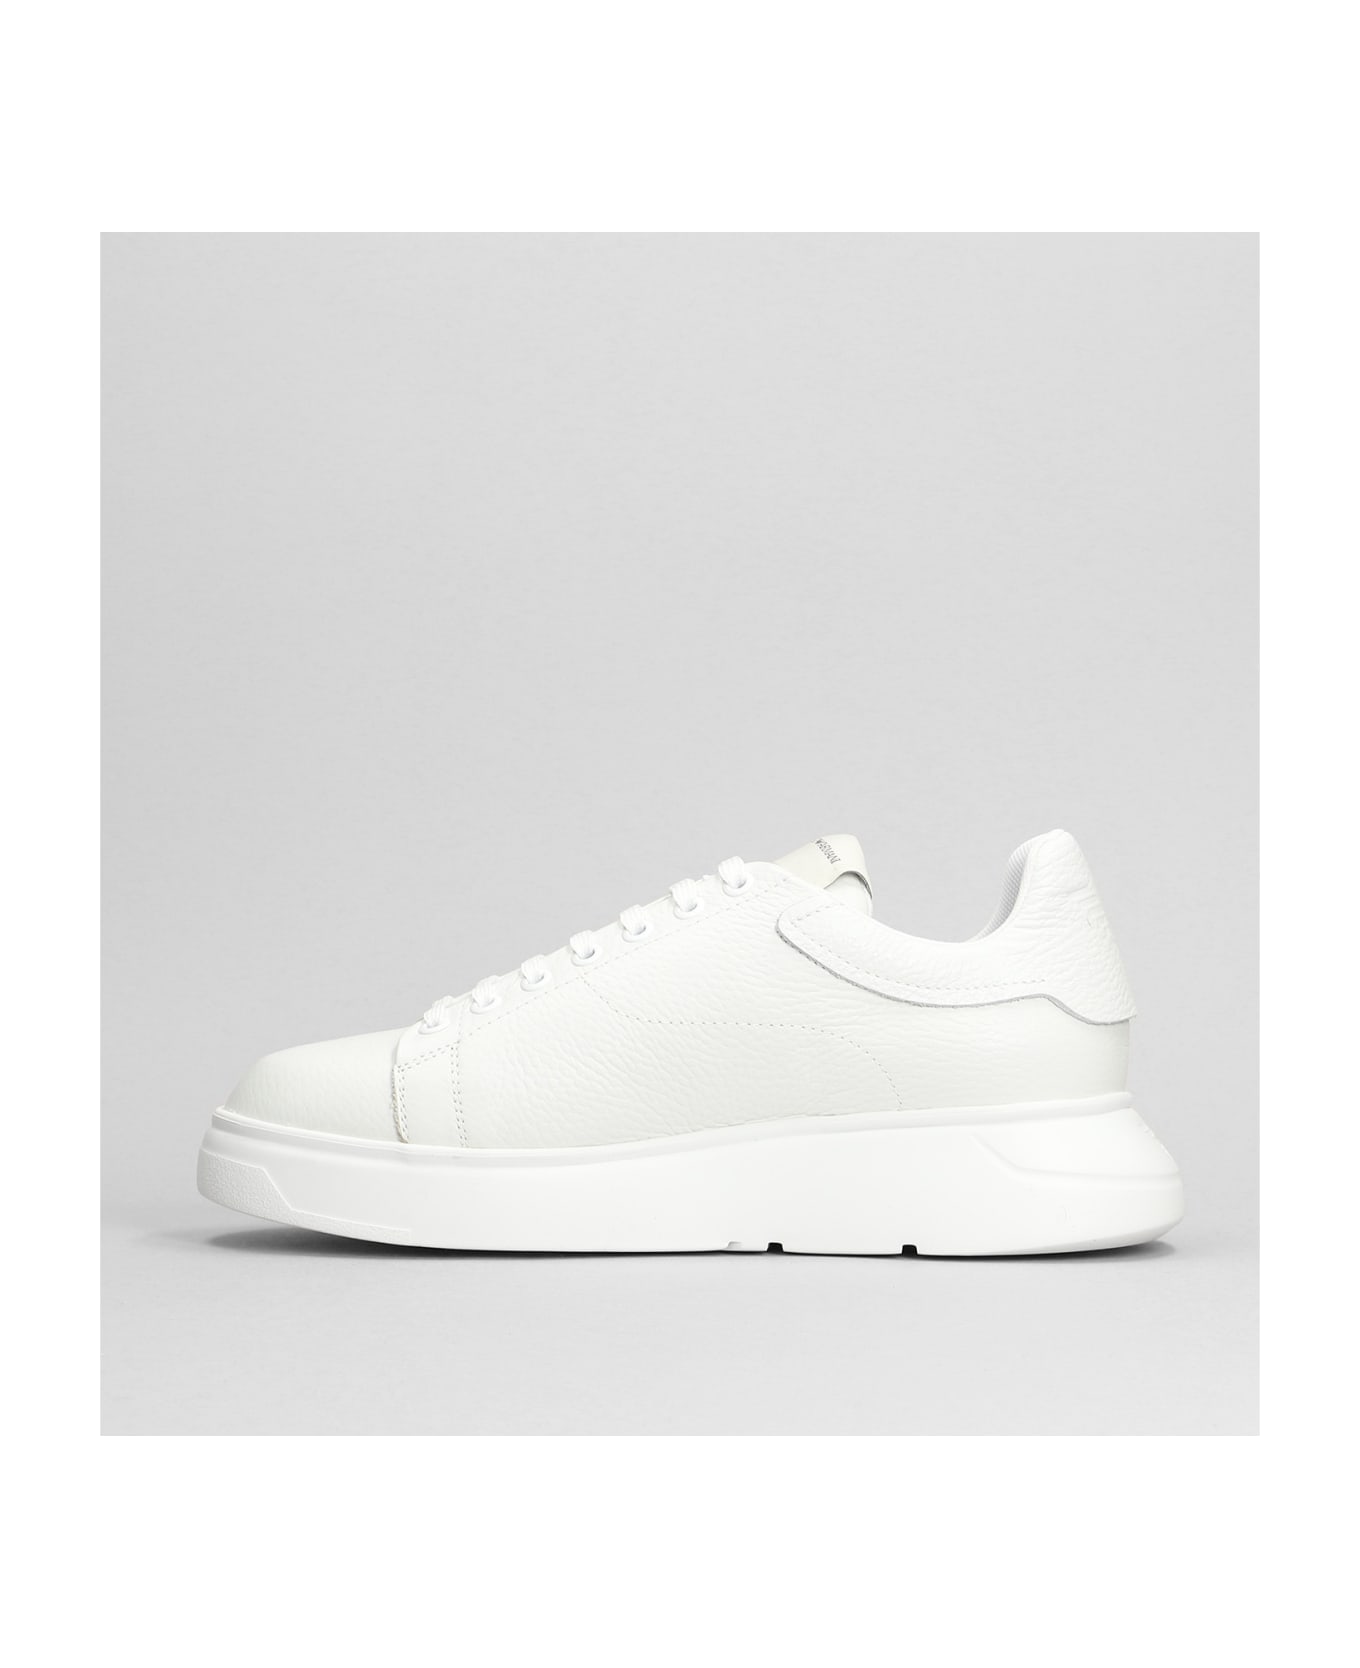 Emporio Armani Sneakers In White Leather - white